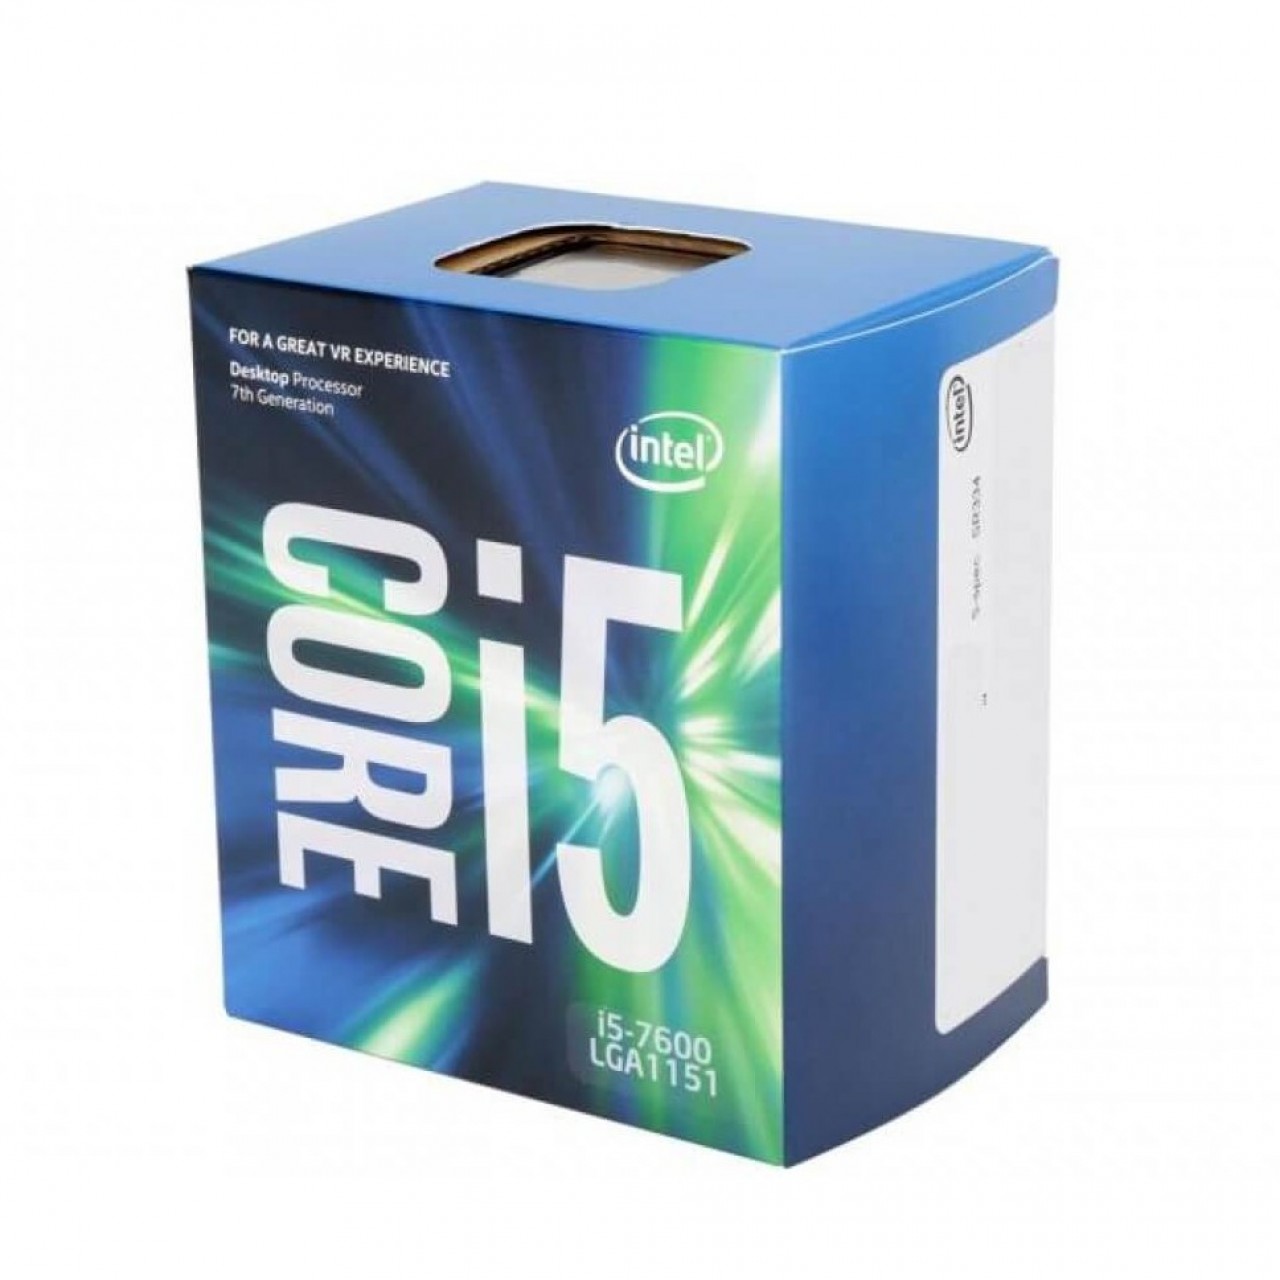 33. Intel Core i5-7600 (BX80677I57600) - 3.5 GHz Quad-Core LGA 1151 Processor – 3.5 GHz Clock Speed